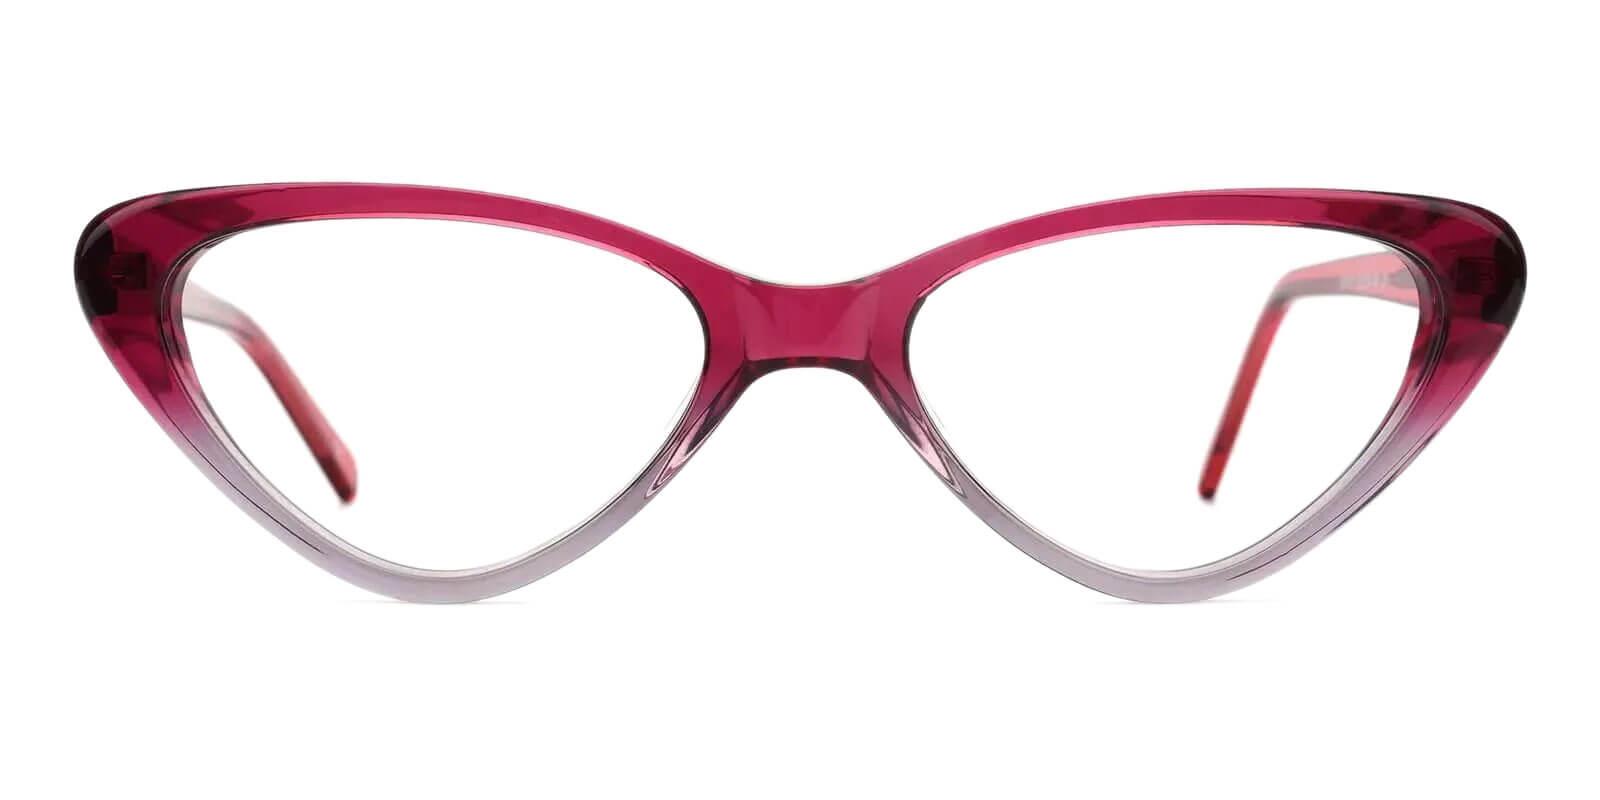 Hannah Purple Acetate Eyeglasses , SpringHinges , UniversalBridgeFit Frames from ABBE Glasses